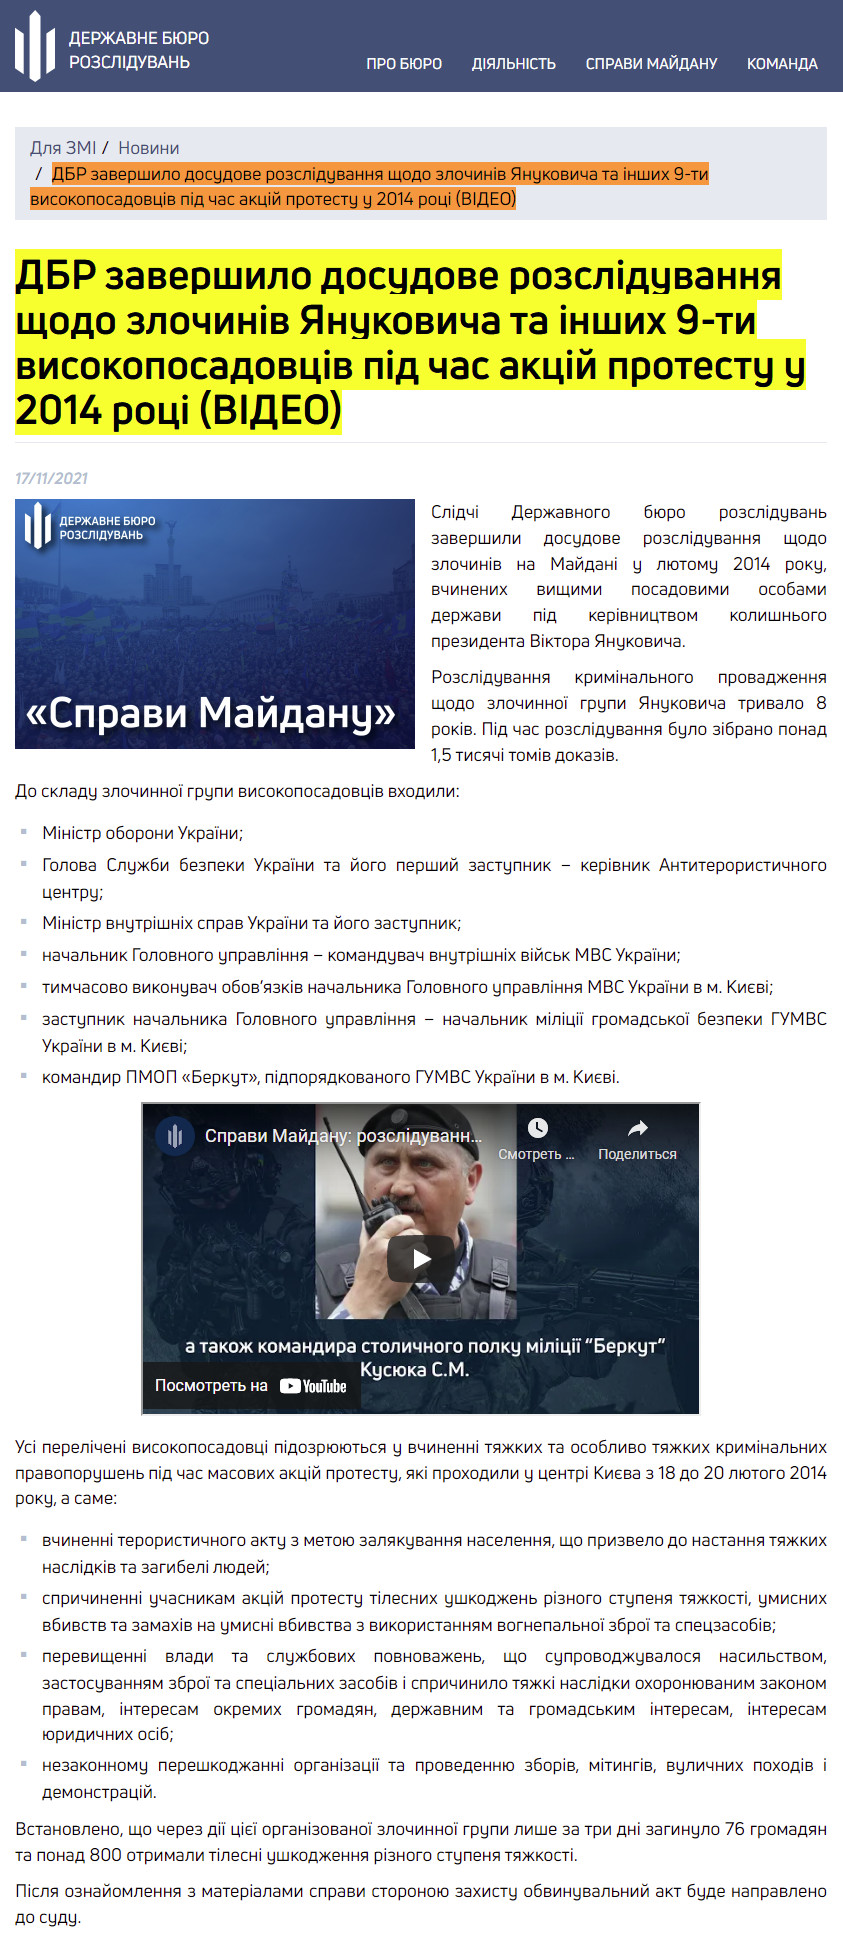 https://dbr.gov.ua/news/dbr-zavershilo-dosudove-rozsliduvannya-shhodo-zlochiniv-yanukovicha-ta-inshih-9-ti-visokoposadovciv-pid-chas-akcij-protestu-u-2014-roci-video